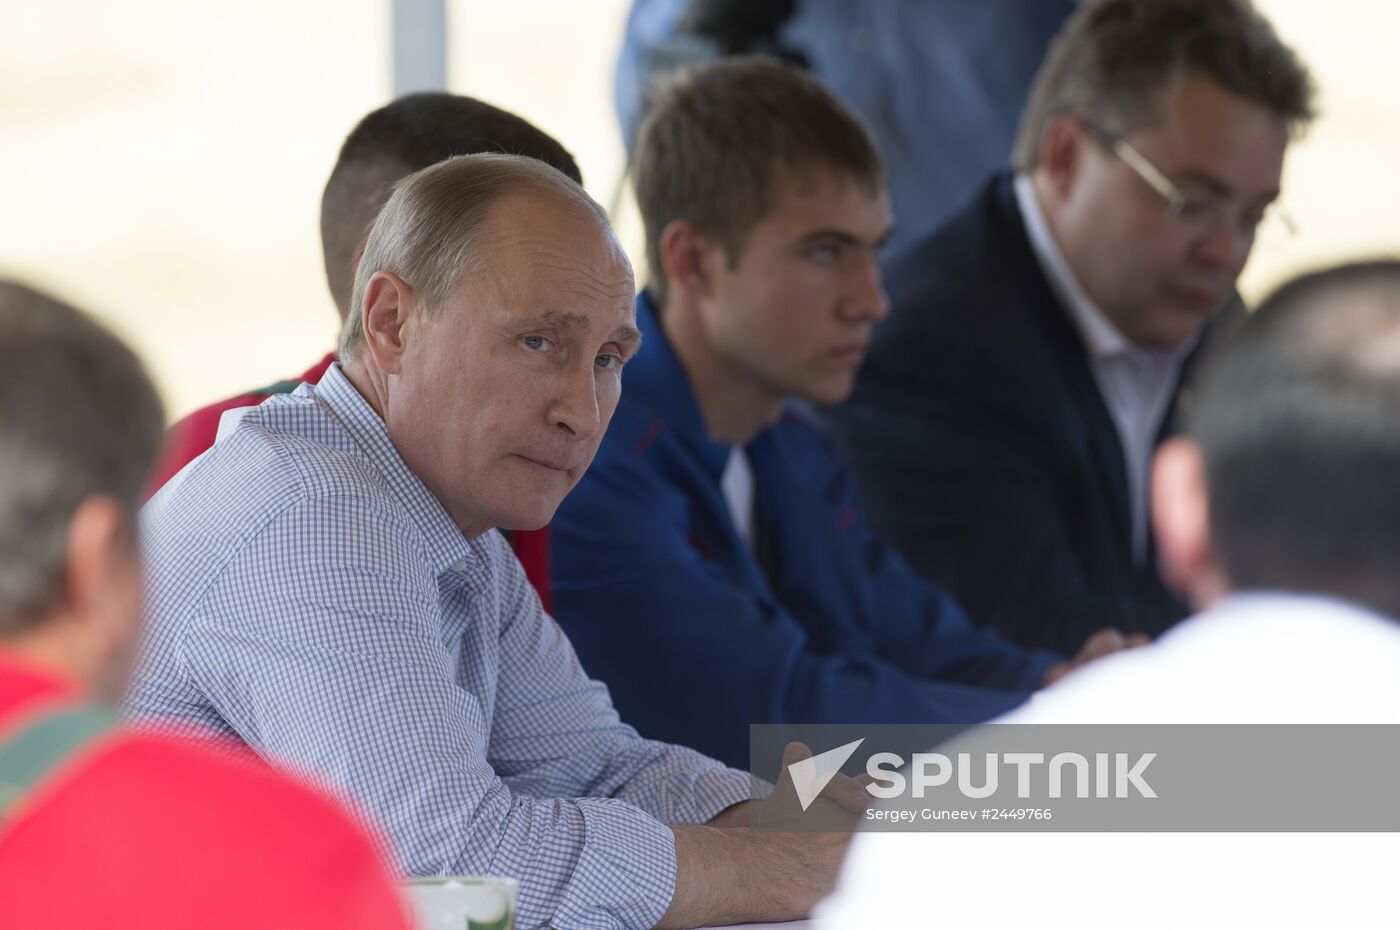 Vladimir Putin's working visit to Stavropol Territory